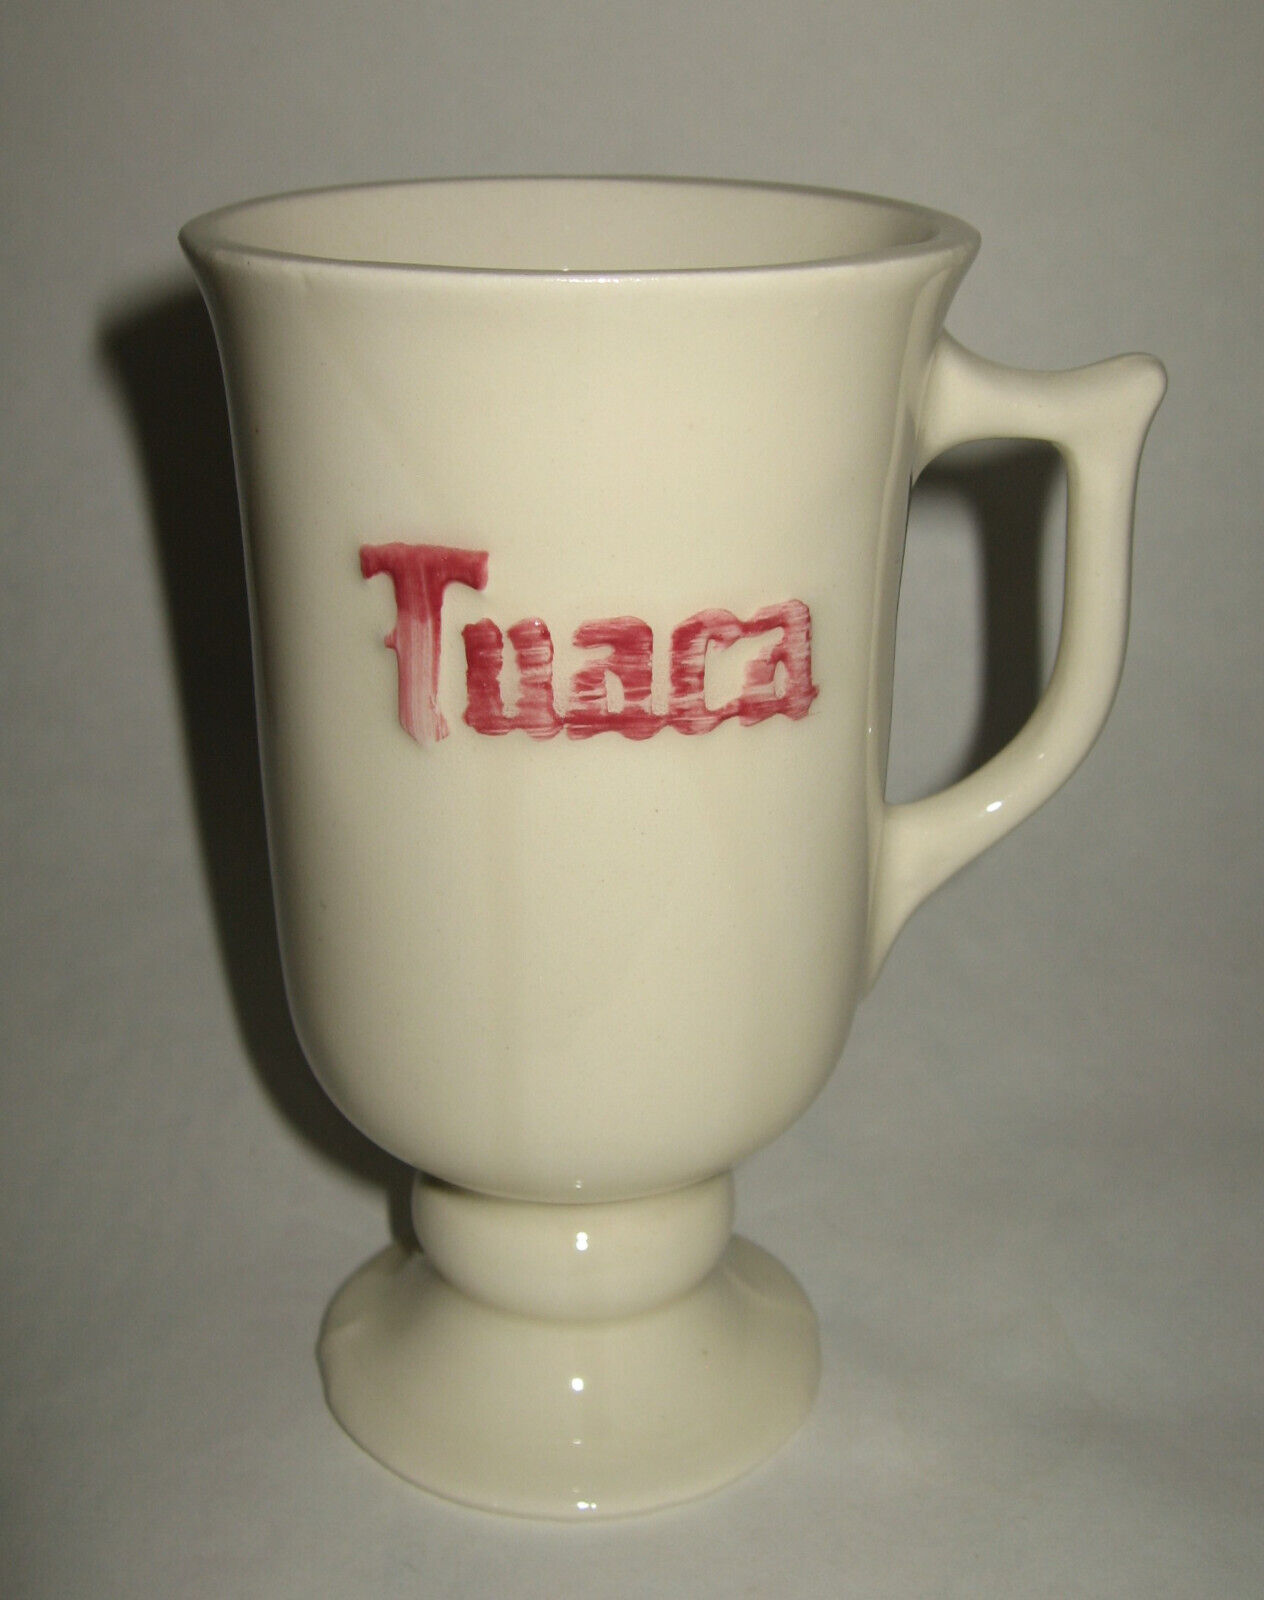 Old Vintage Tuaca Ceramic Footed Mug Cup Promo for Italian Drink Barware Italy